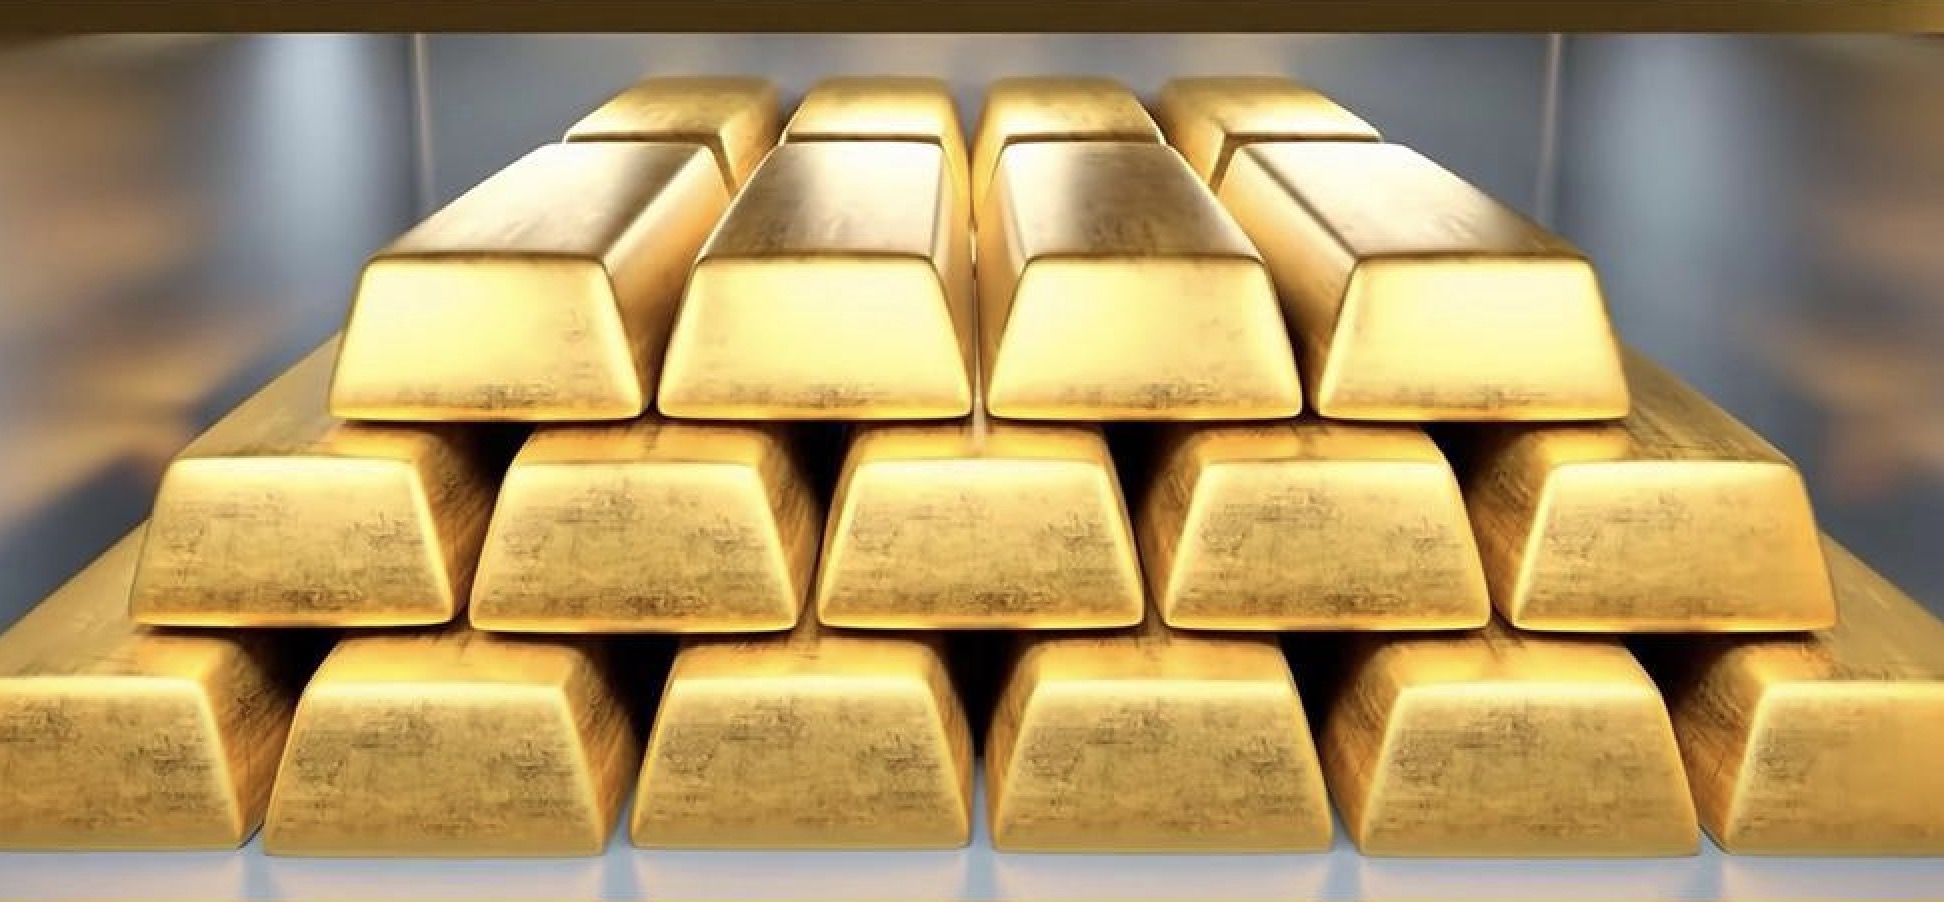 Pengingat perdagangan emas: Harga emas kembali turun setelah mencapai titik tertinggi baru sepanjang masa. Bisakah terus naik di masa depan?